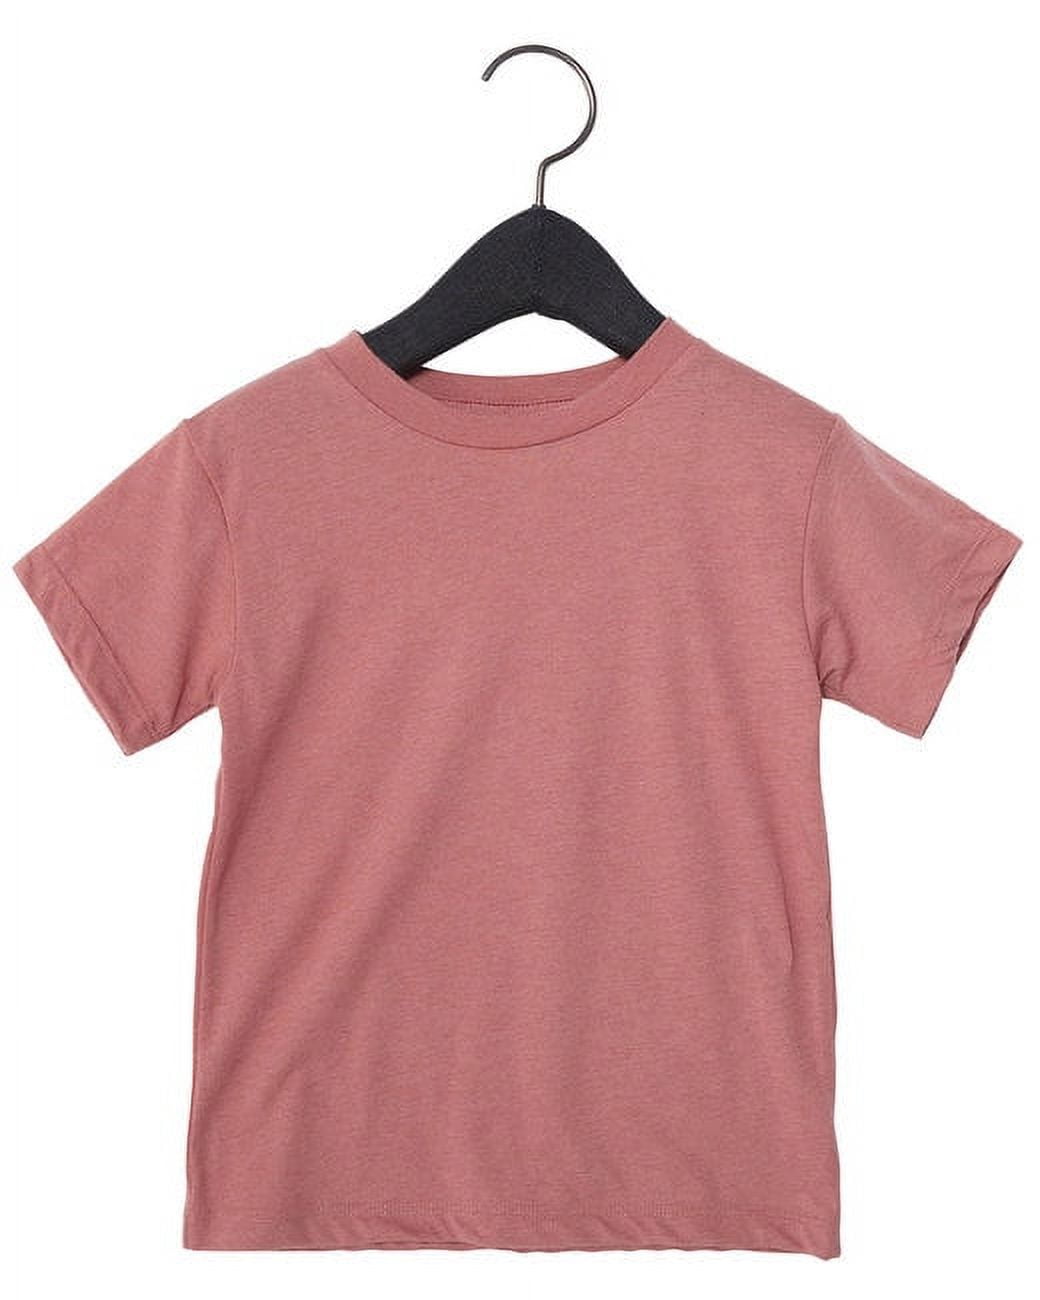 Toddler Jersey Short-Sleeve T-Shirt 4T MAUVE HEATHER